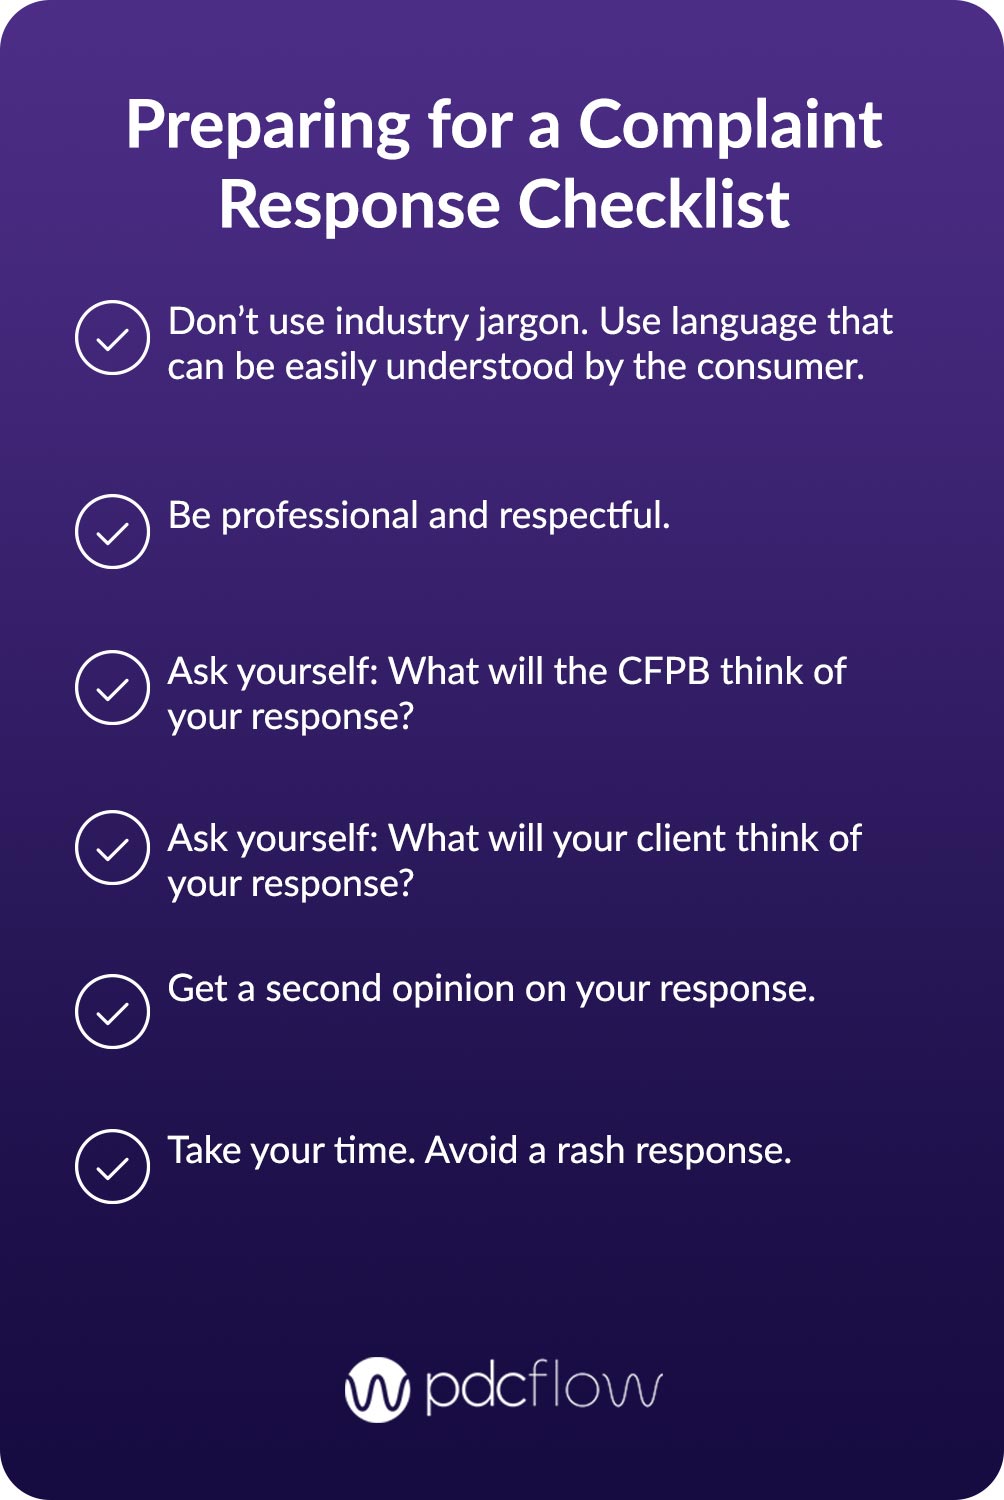 Preparing for a CFPB Complaint Response Checklist